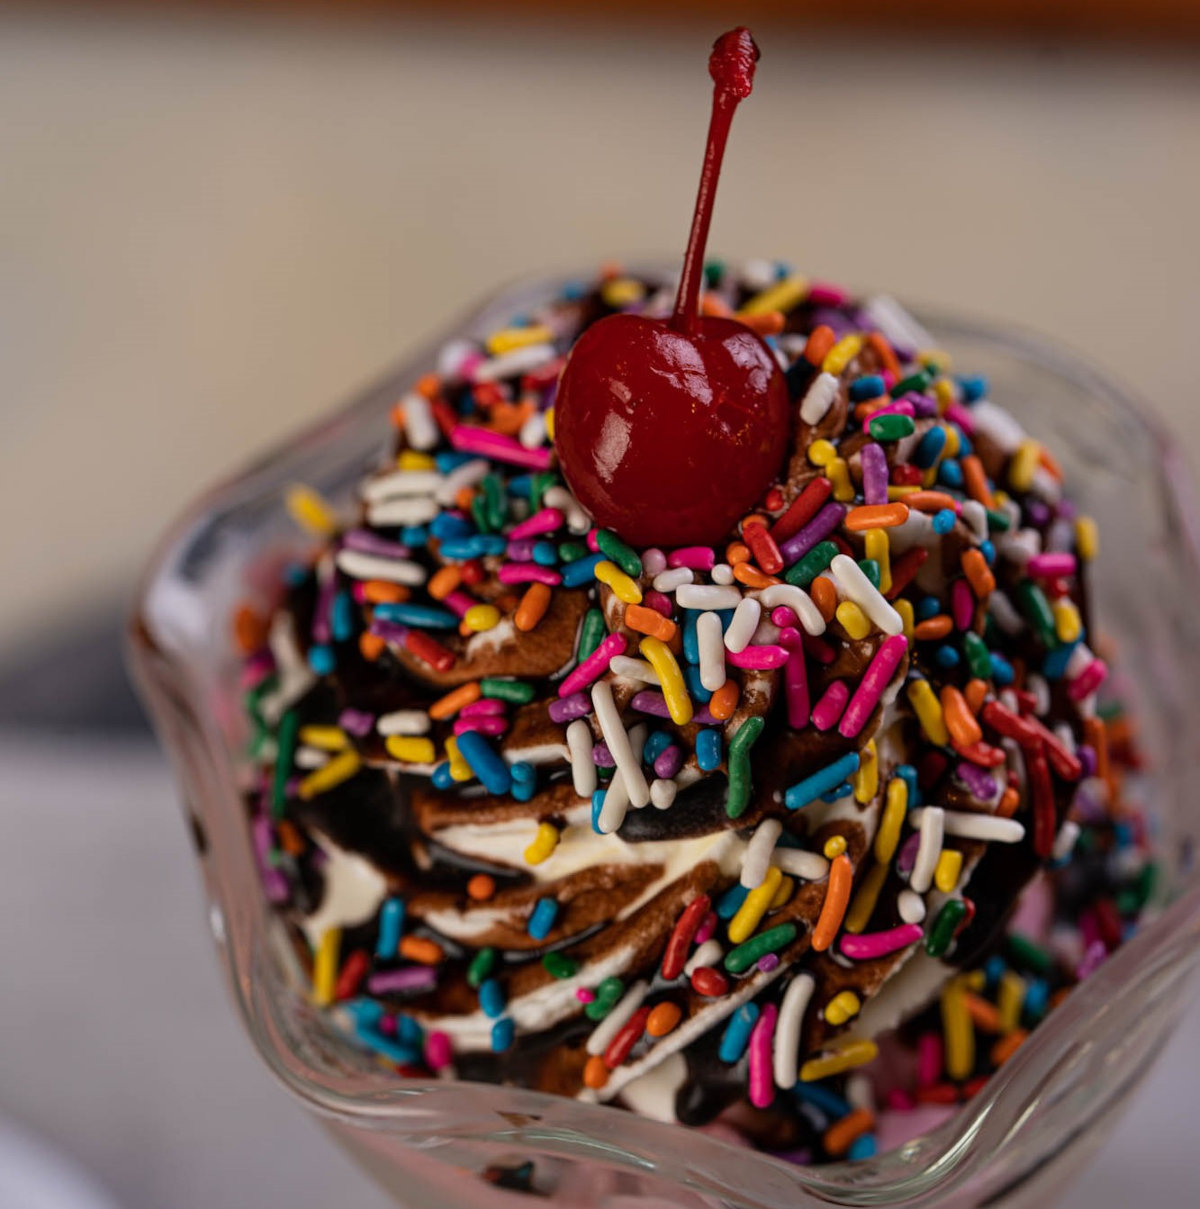 A Chocolate Ice Cream Sundae with Chocolate Syrup and Rainbow Sprinkles